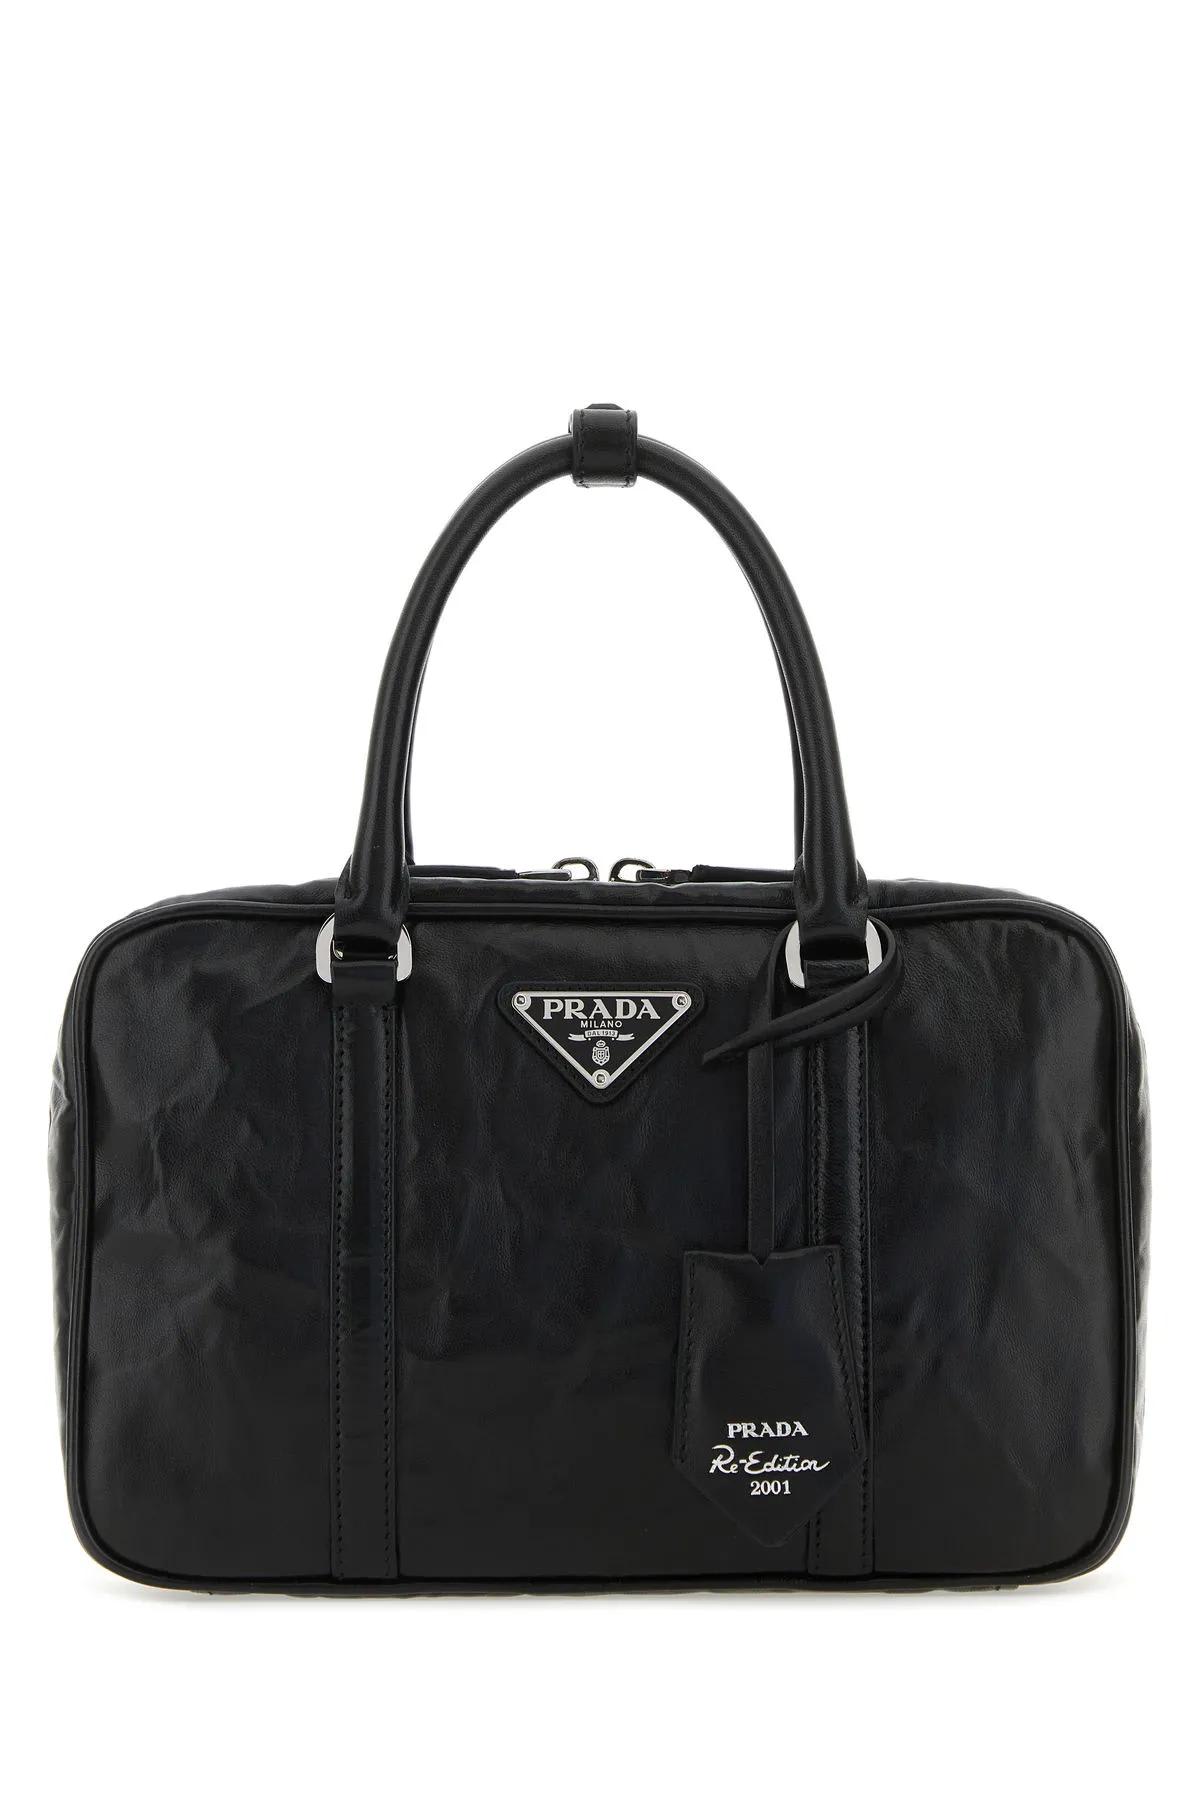 Shop Prada Black Nappa Leather Handbag